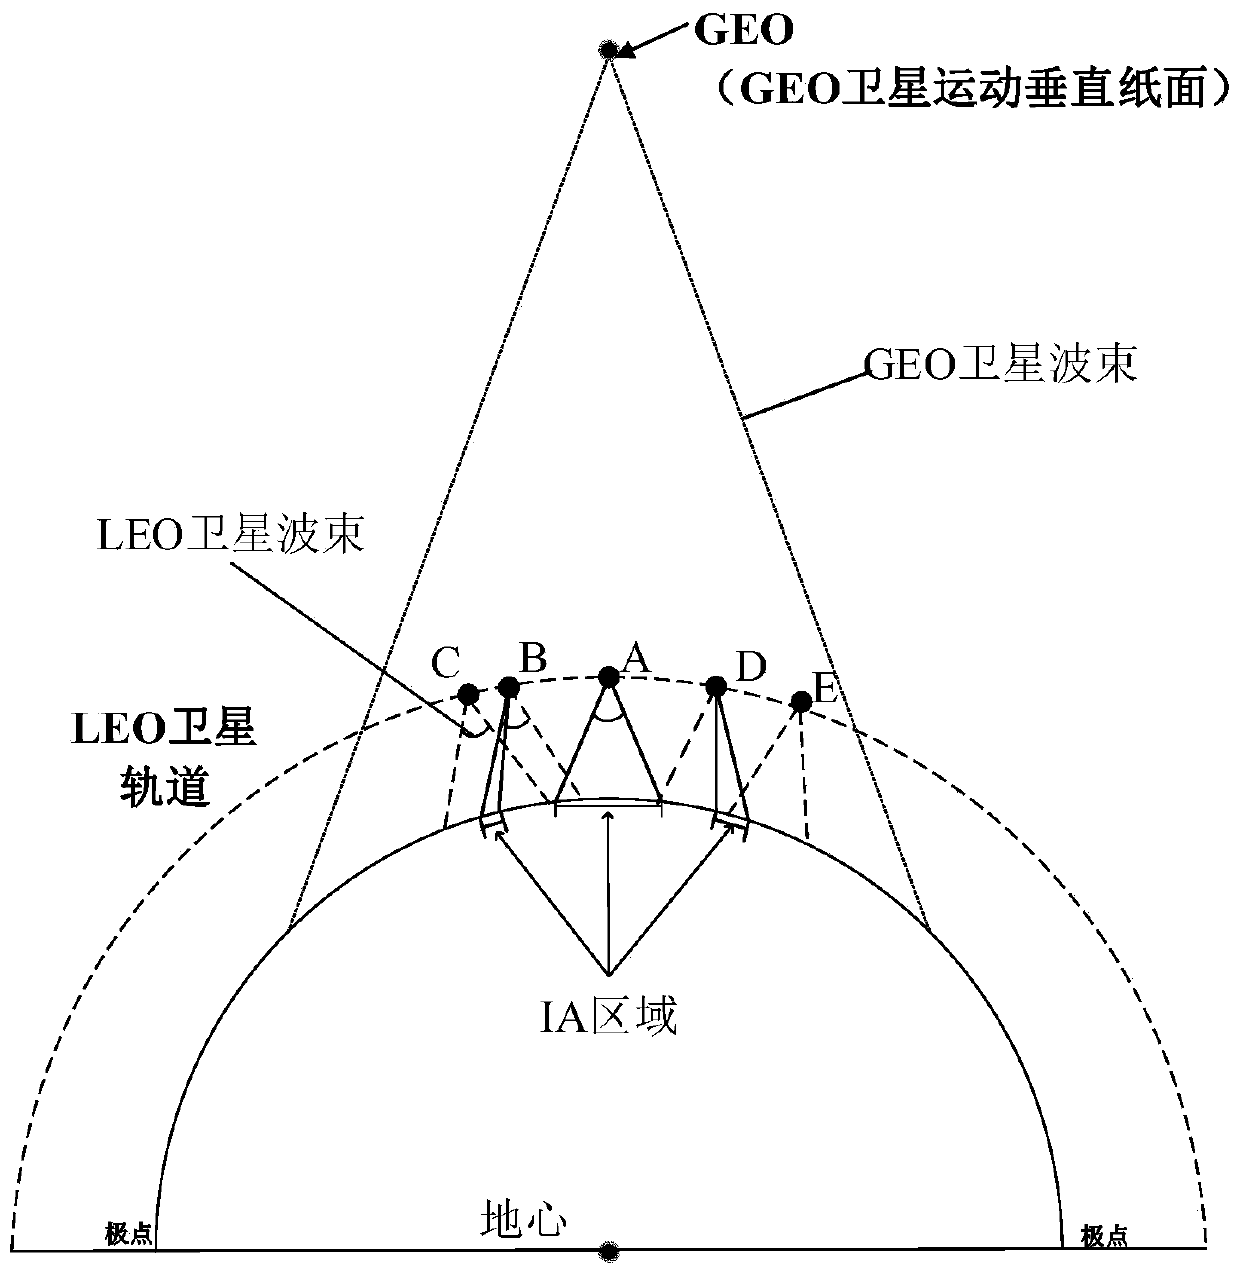 Method for avoiding uplink interference of asynchronous orbit satellite to synchronous orbit satellite